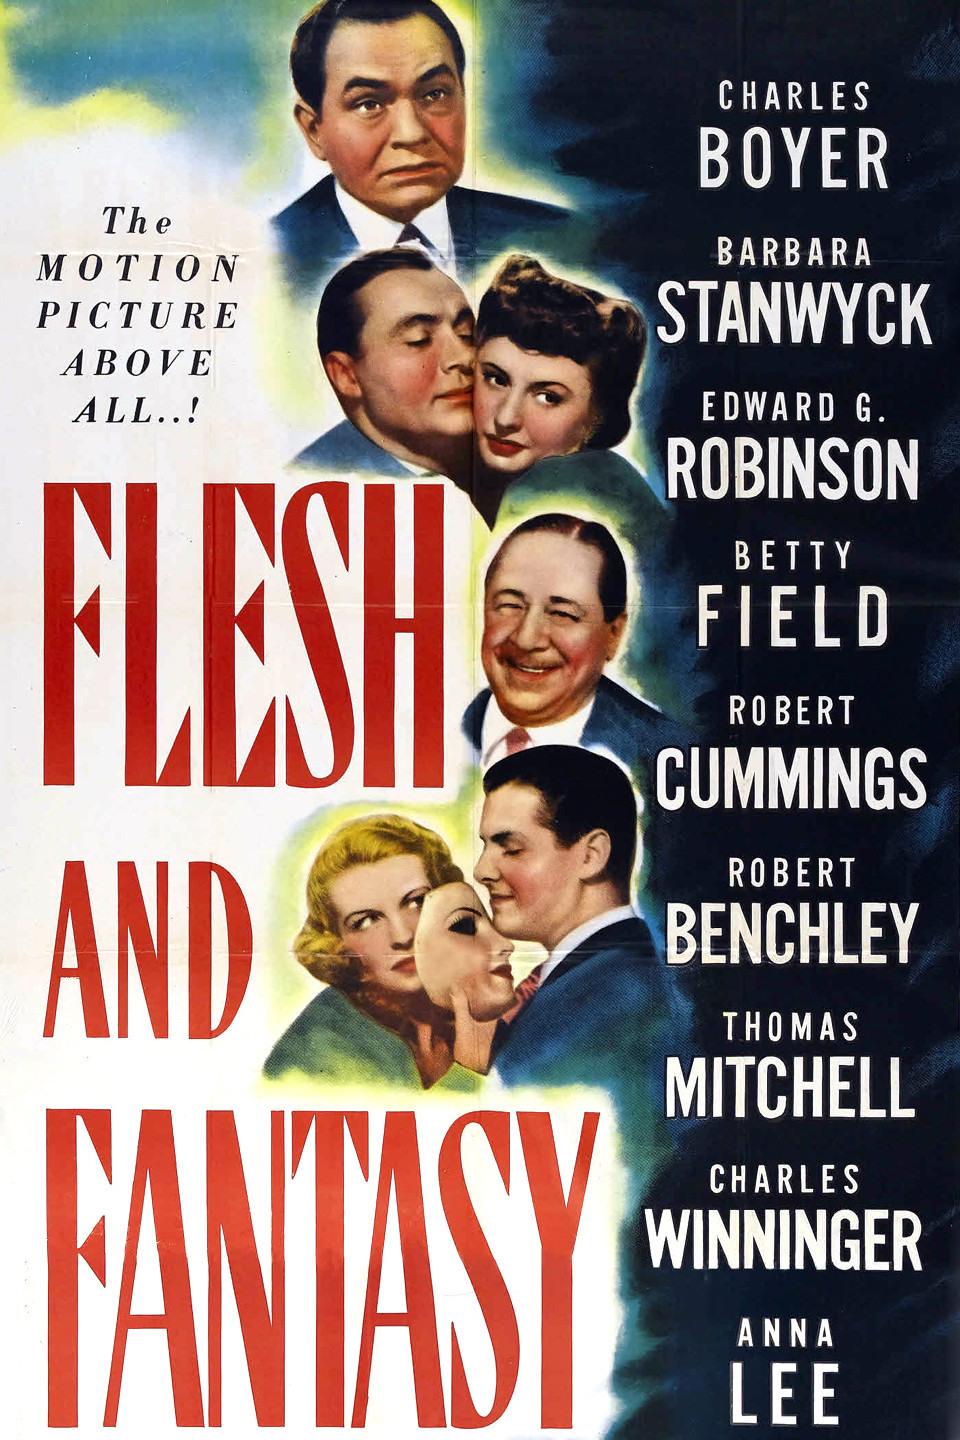 FLESH AND FANTASY (1943)